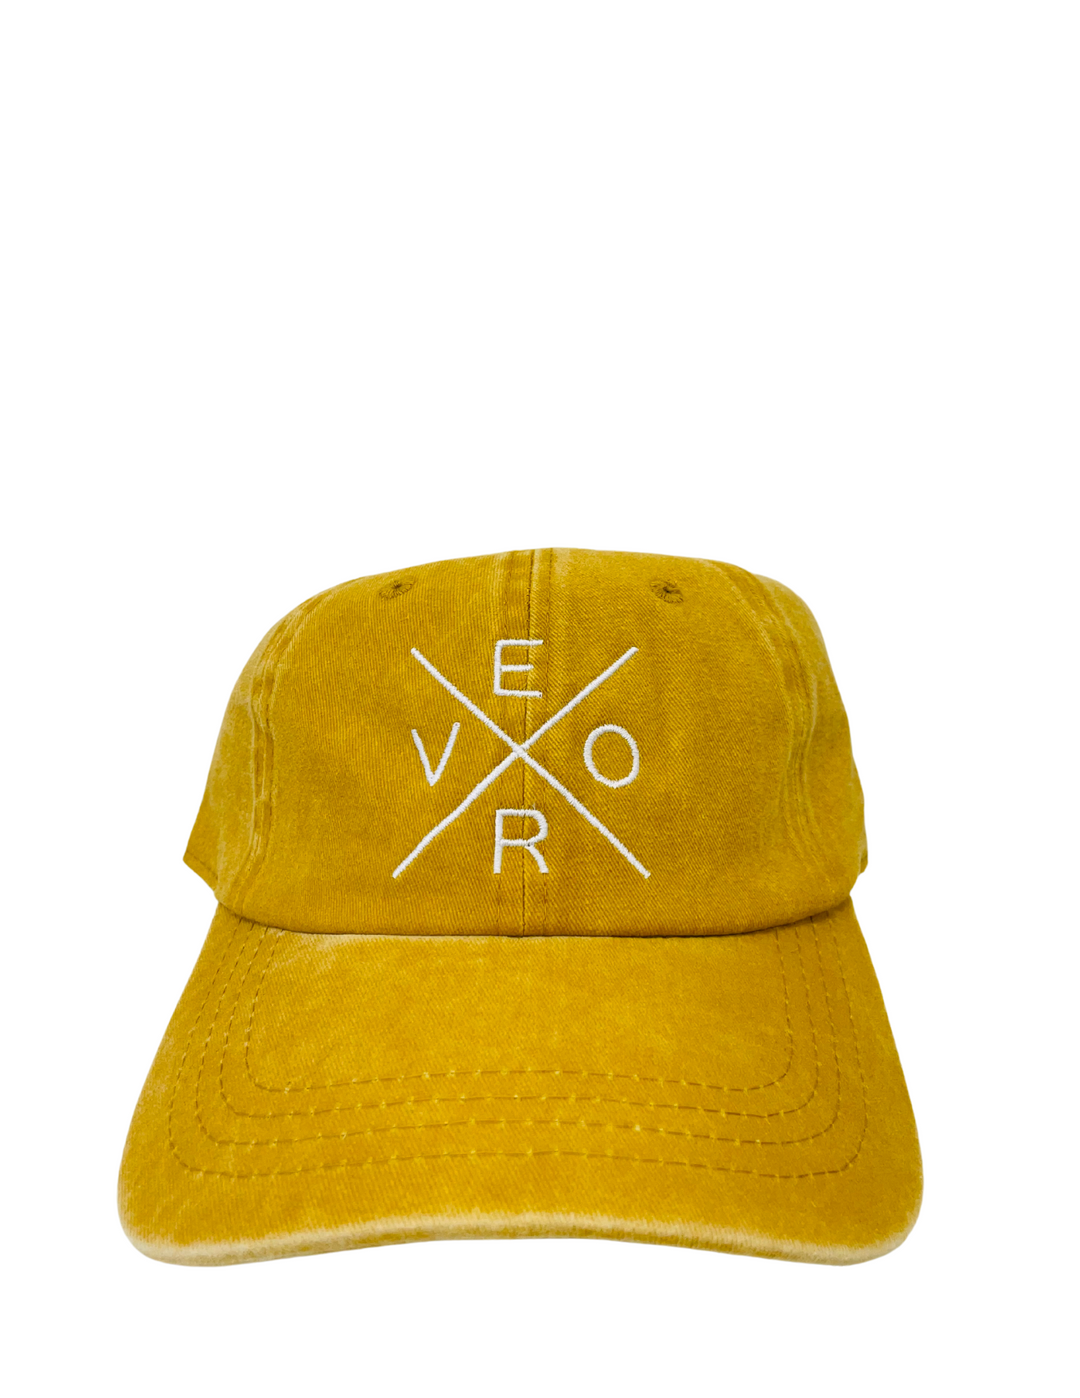 Vero Hat - Gold & White